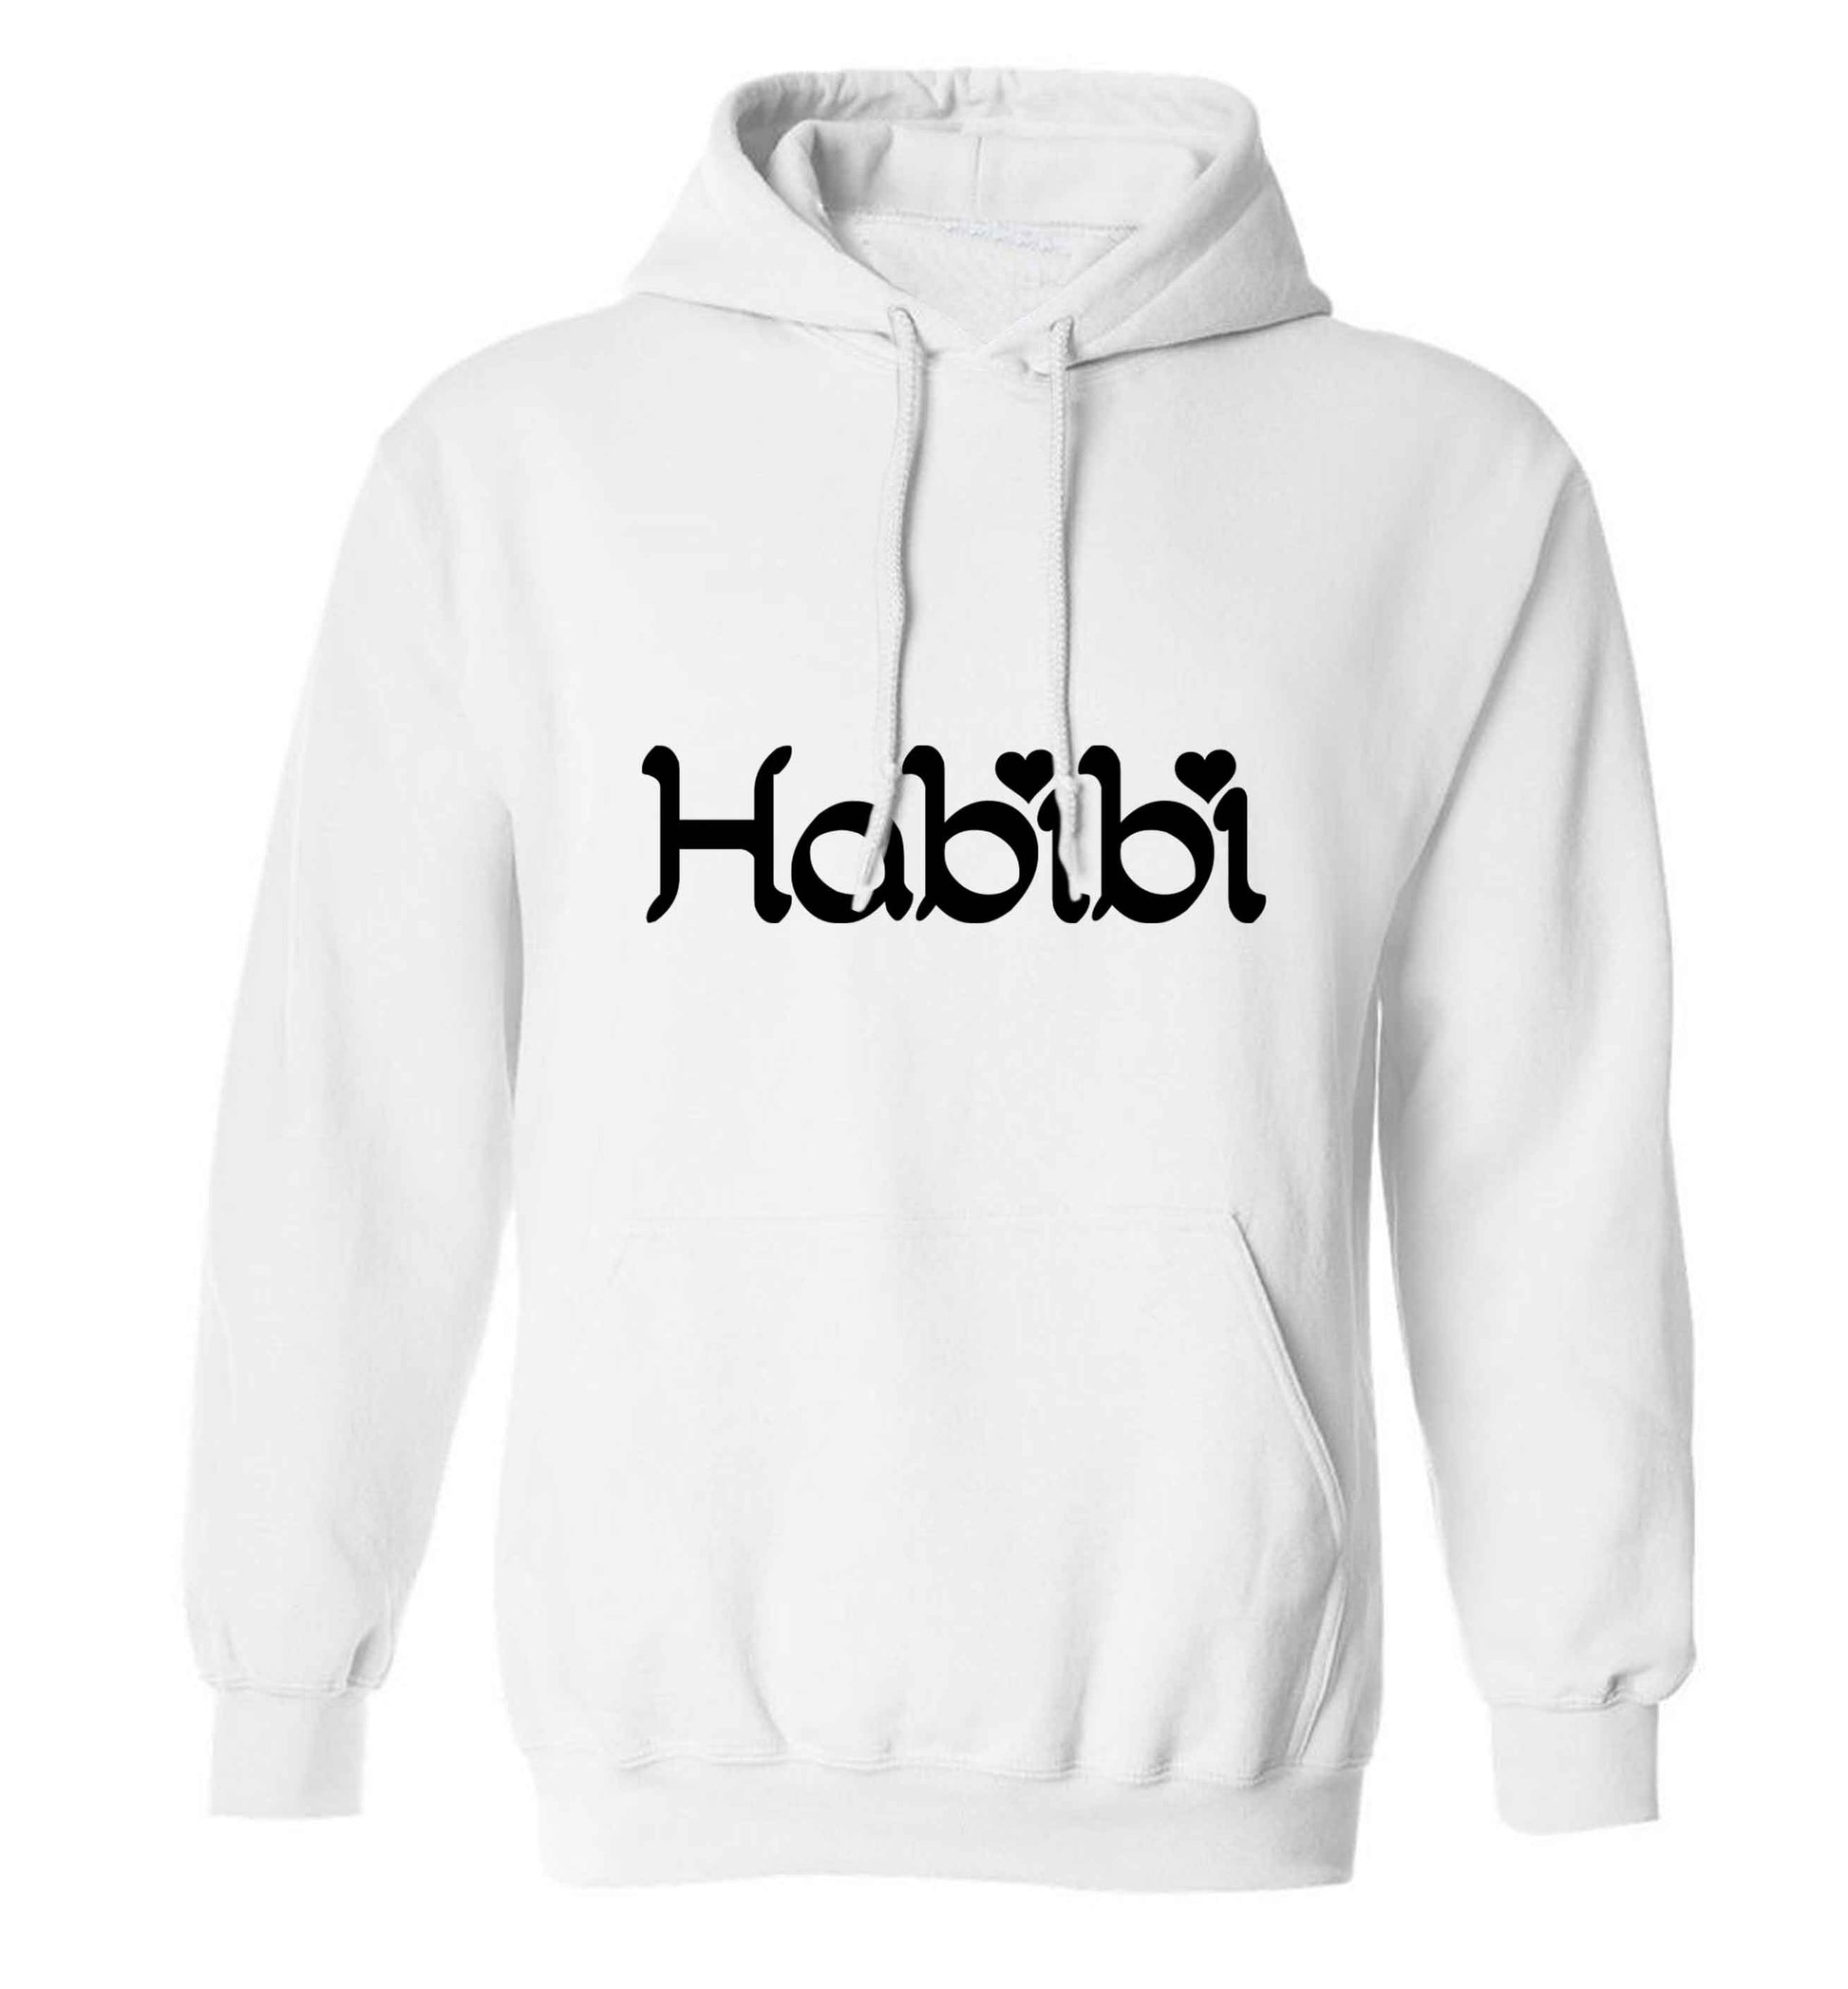 Habibi adults unisex white hoodie 2XL